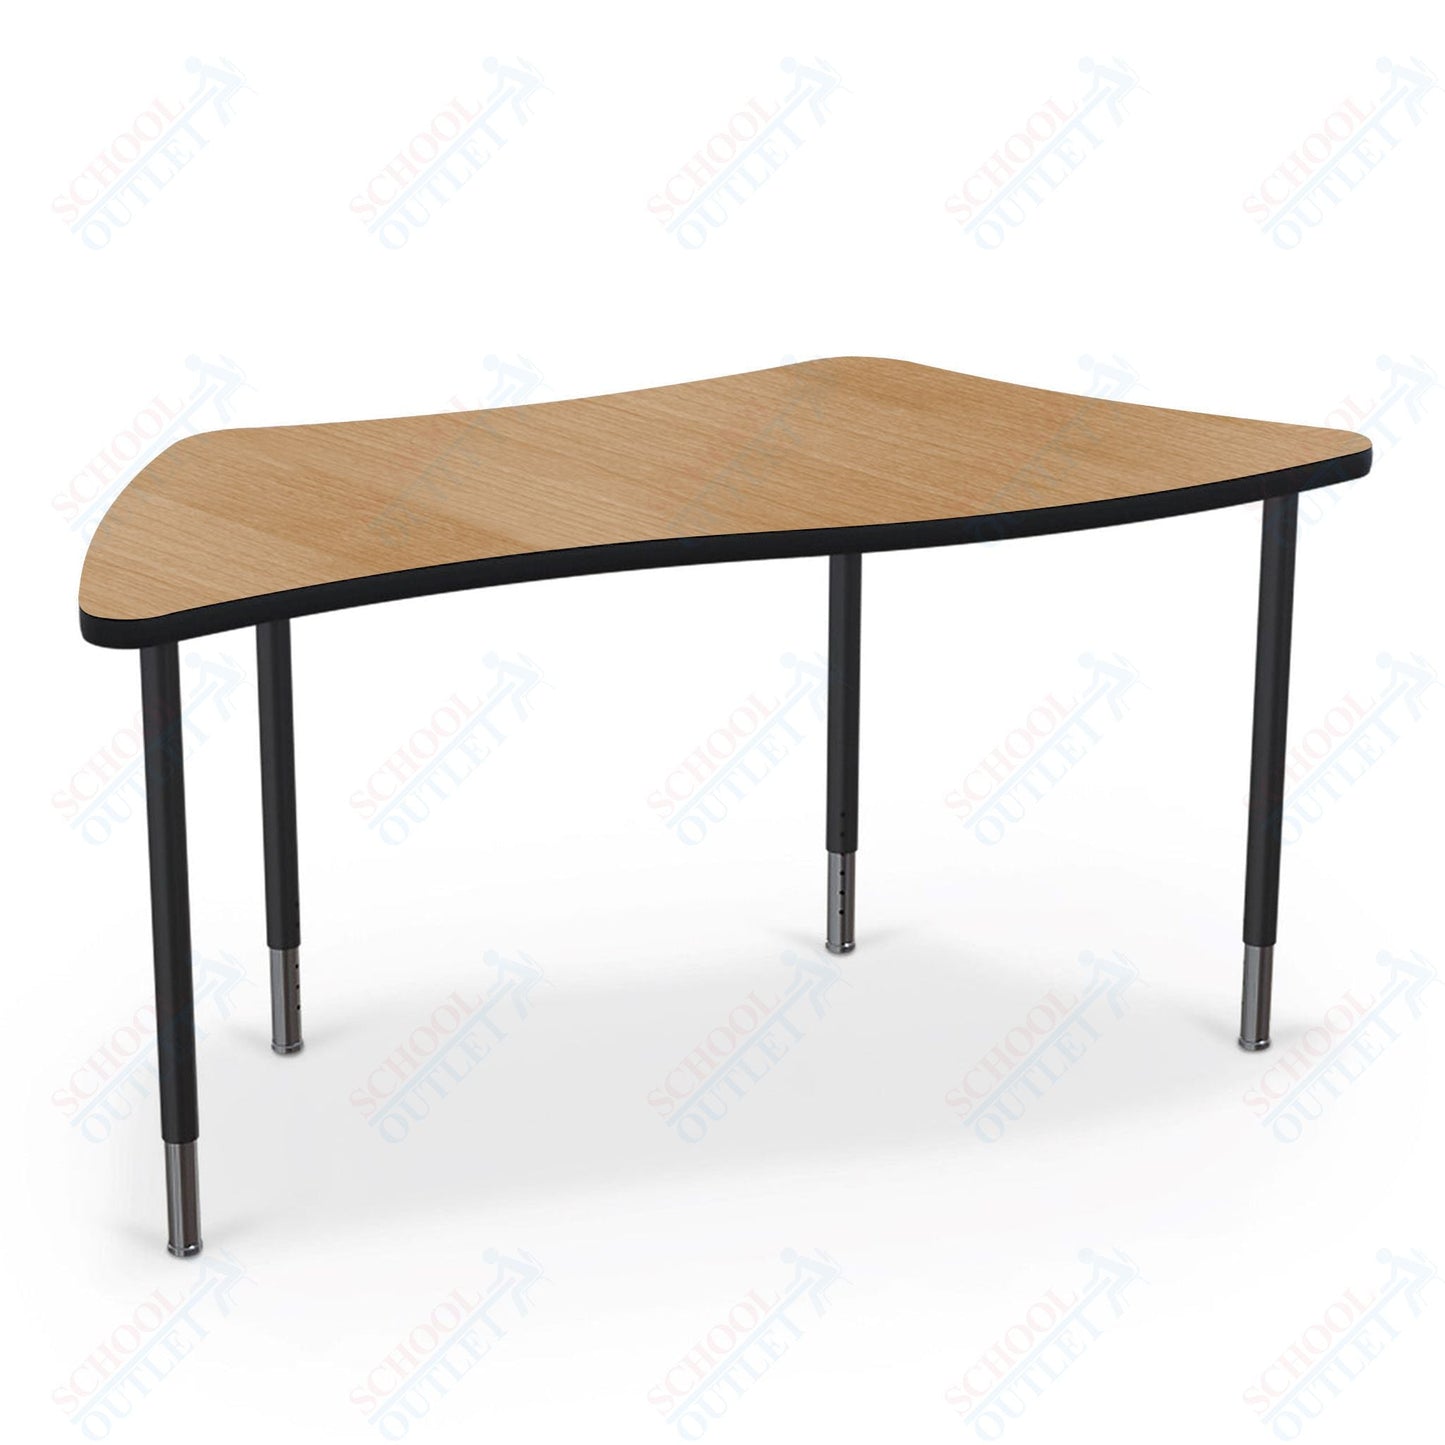 Mooreco Creator Configurable Tables - Trapezoid - Black Edgeband - Black Legs (Mooreco 1633J1) - SchoolOutlet